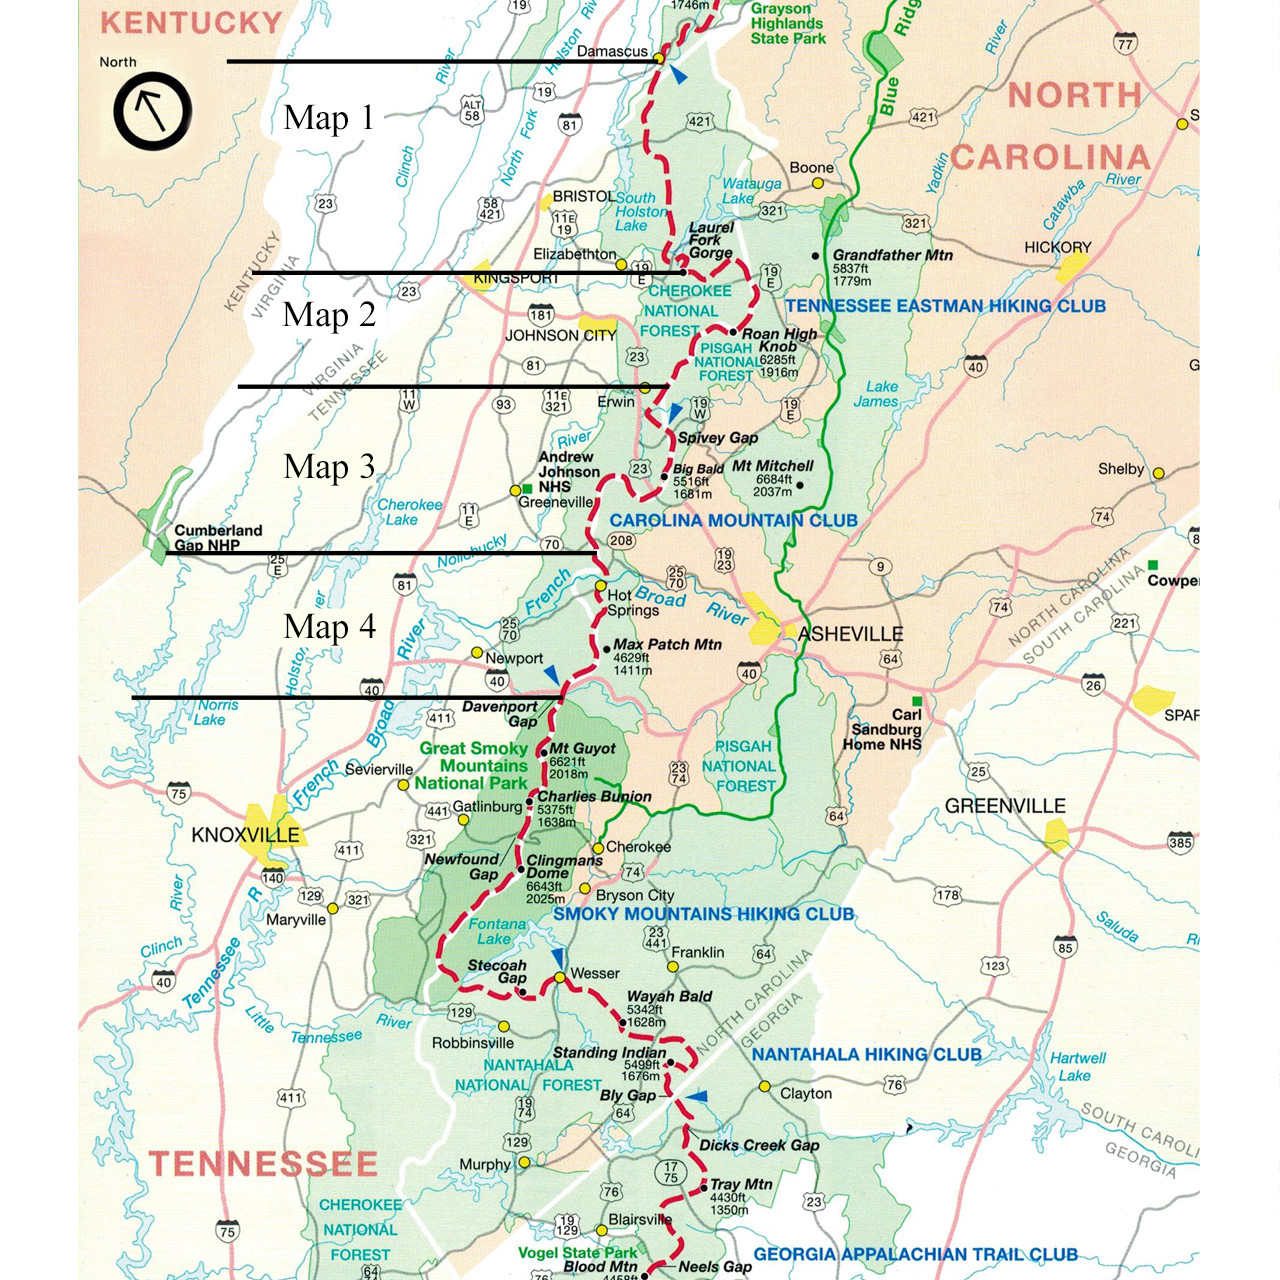 Tennessee-North Carolina Maps - Appalachian Trail Conservancy